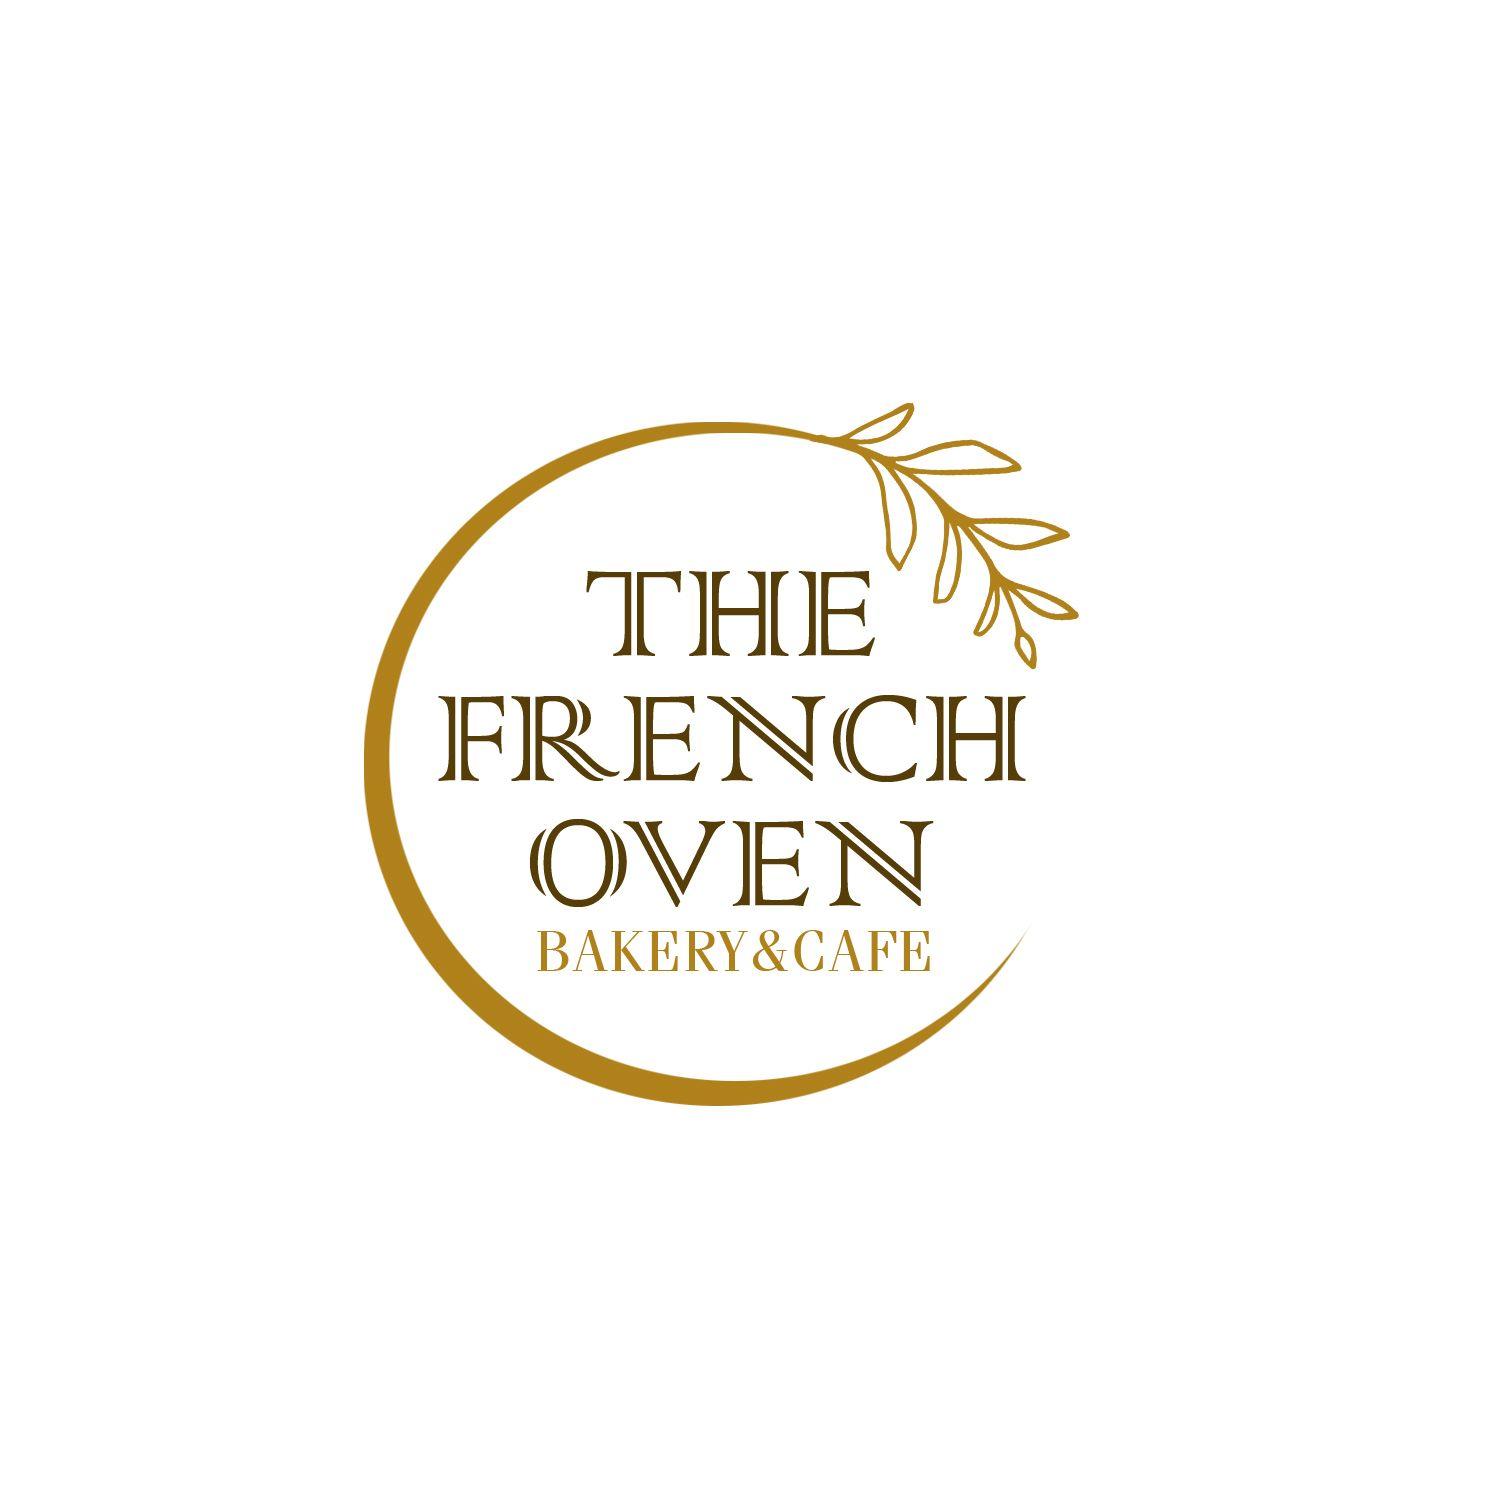 French Restaurant Logo - Upmarket, Serious, French Restaurant Logo Design for The French Oven ...